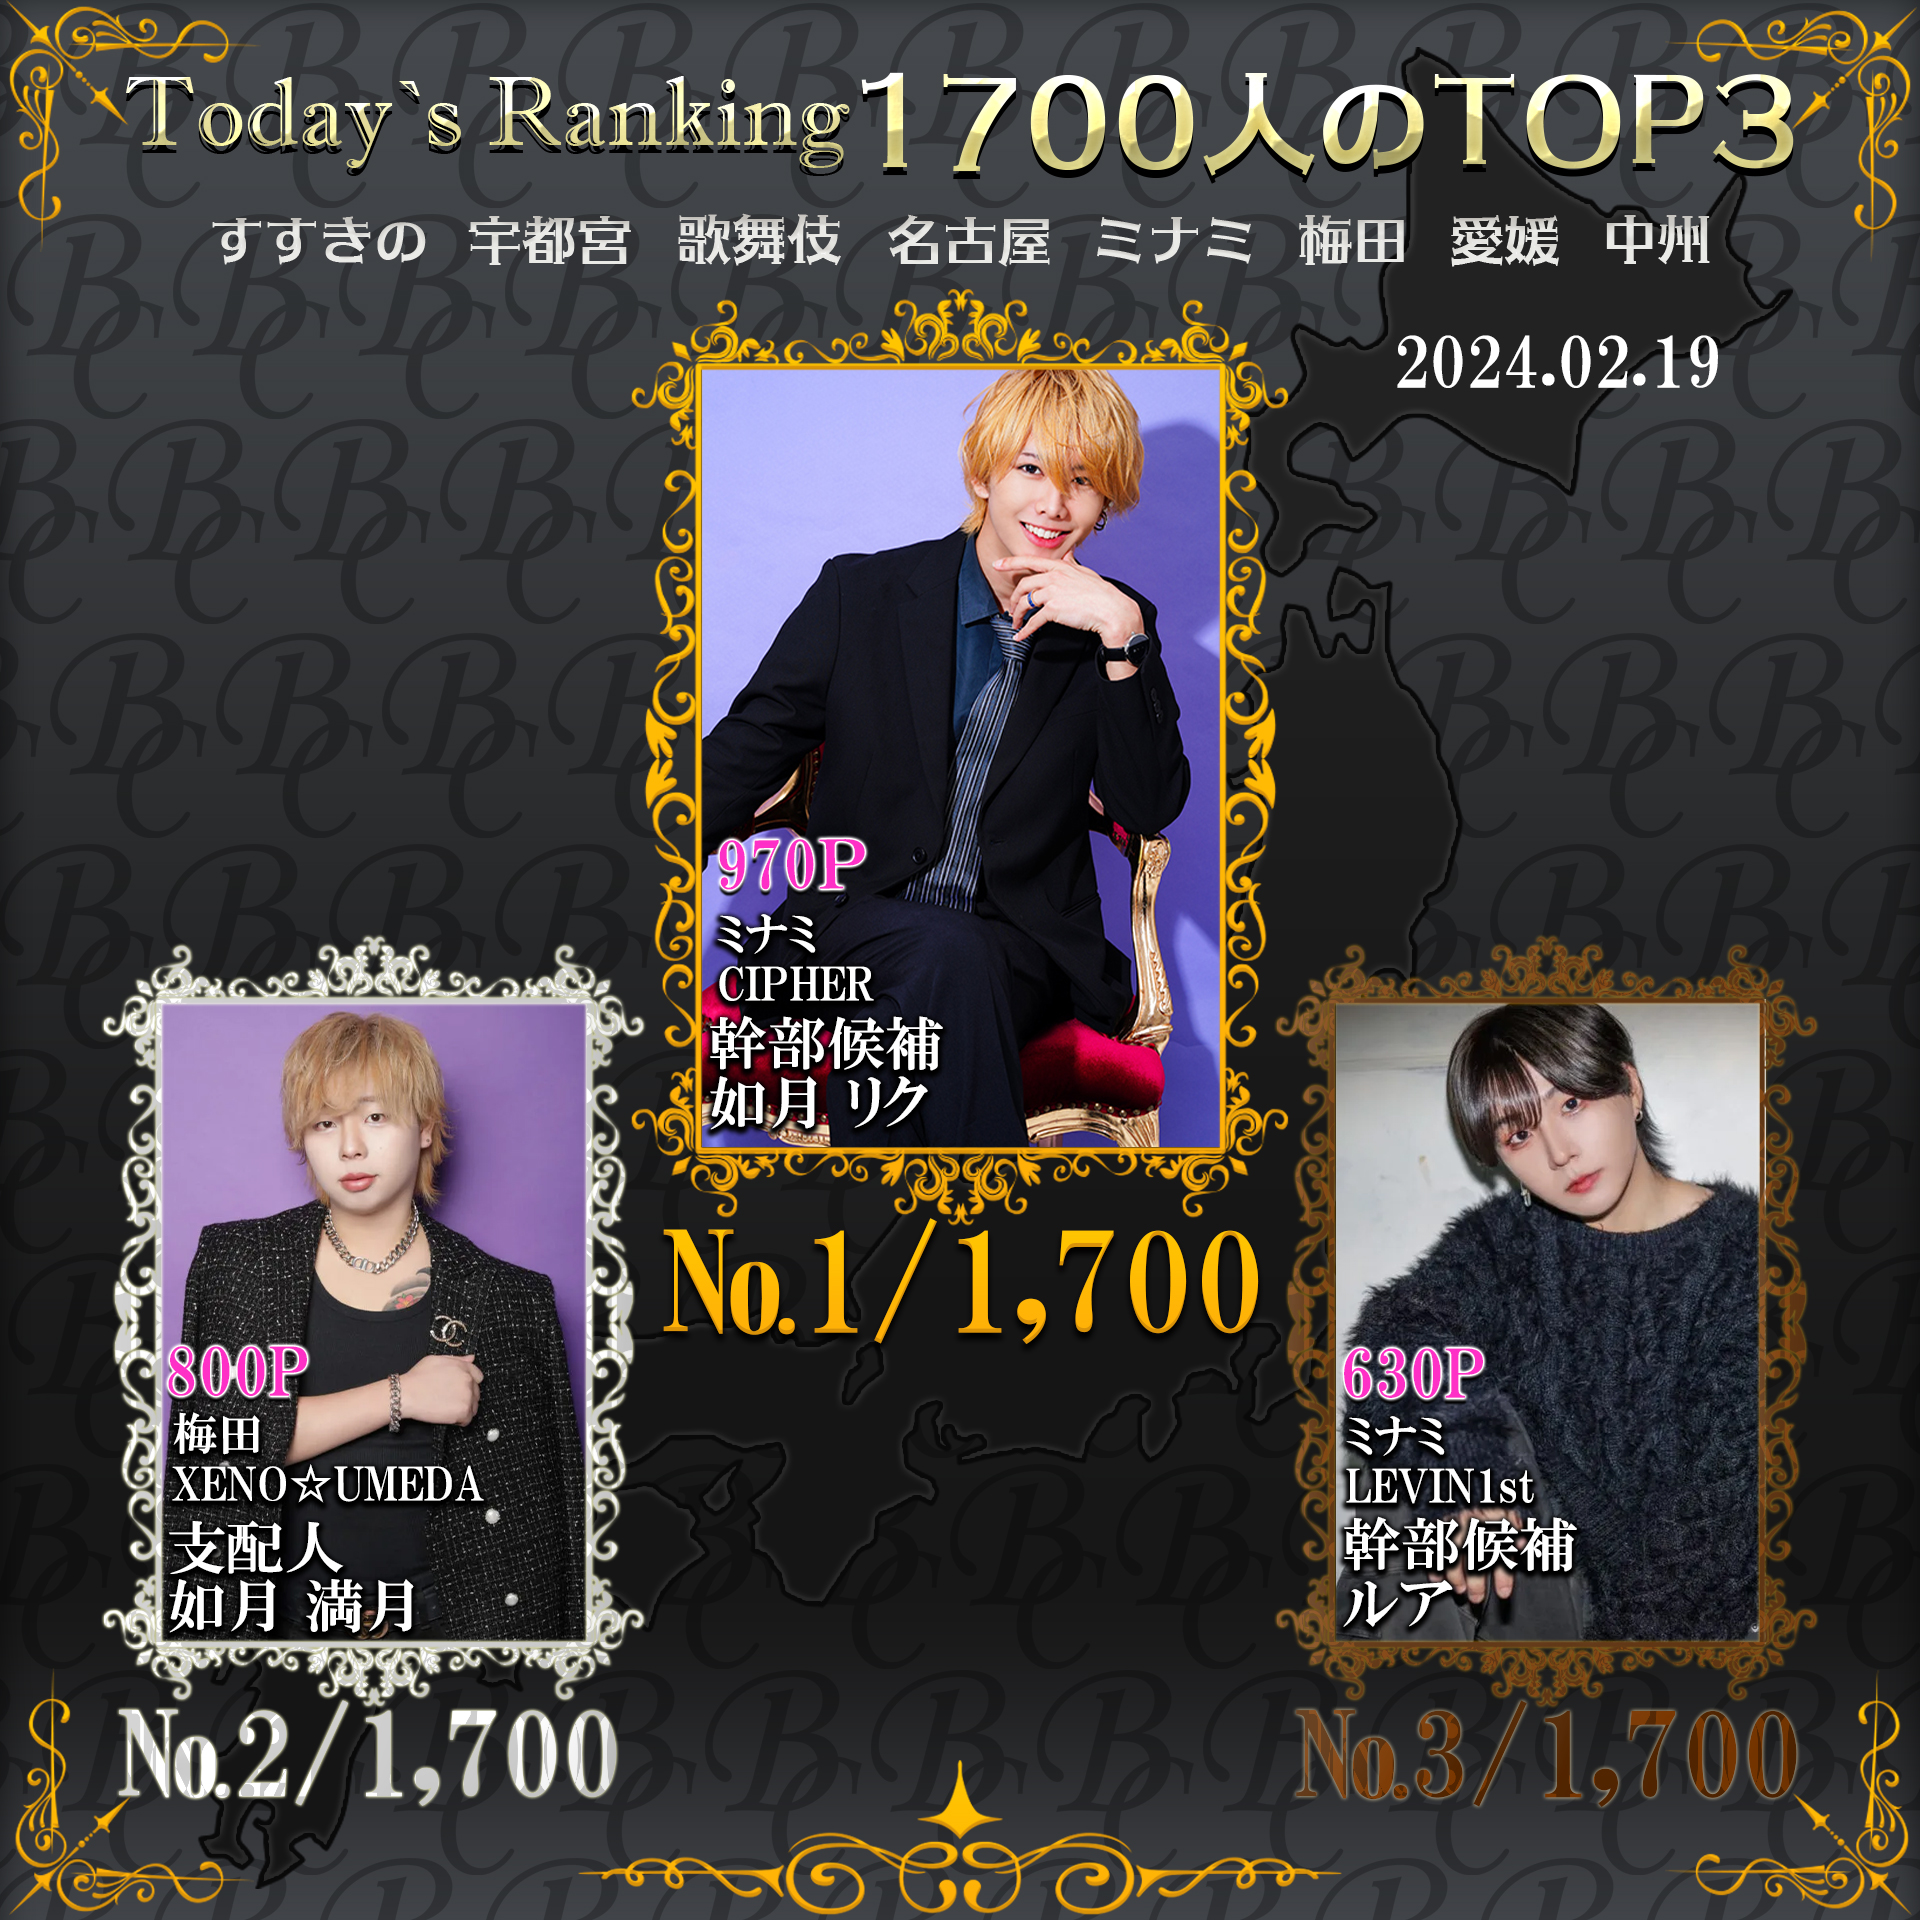 2/19 Today’s Ranking